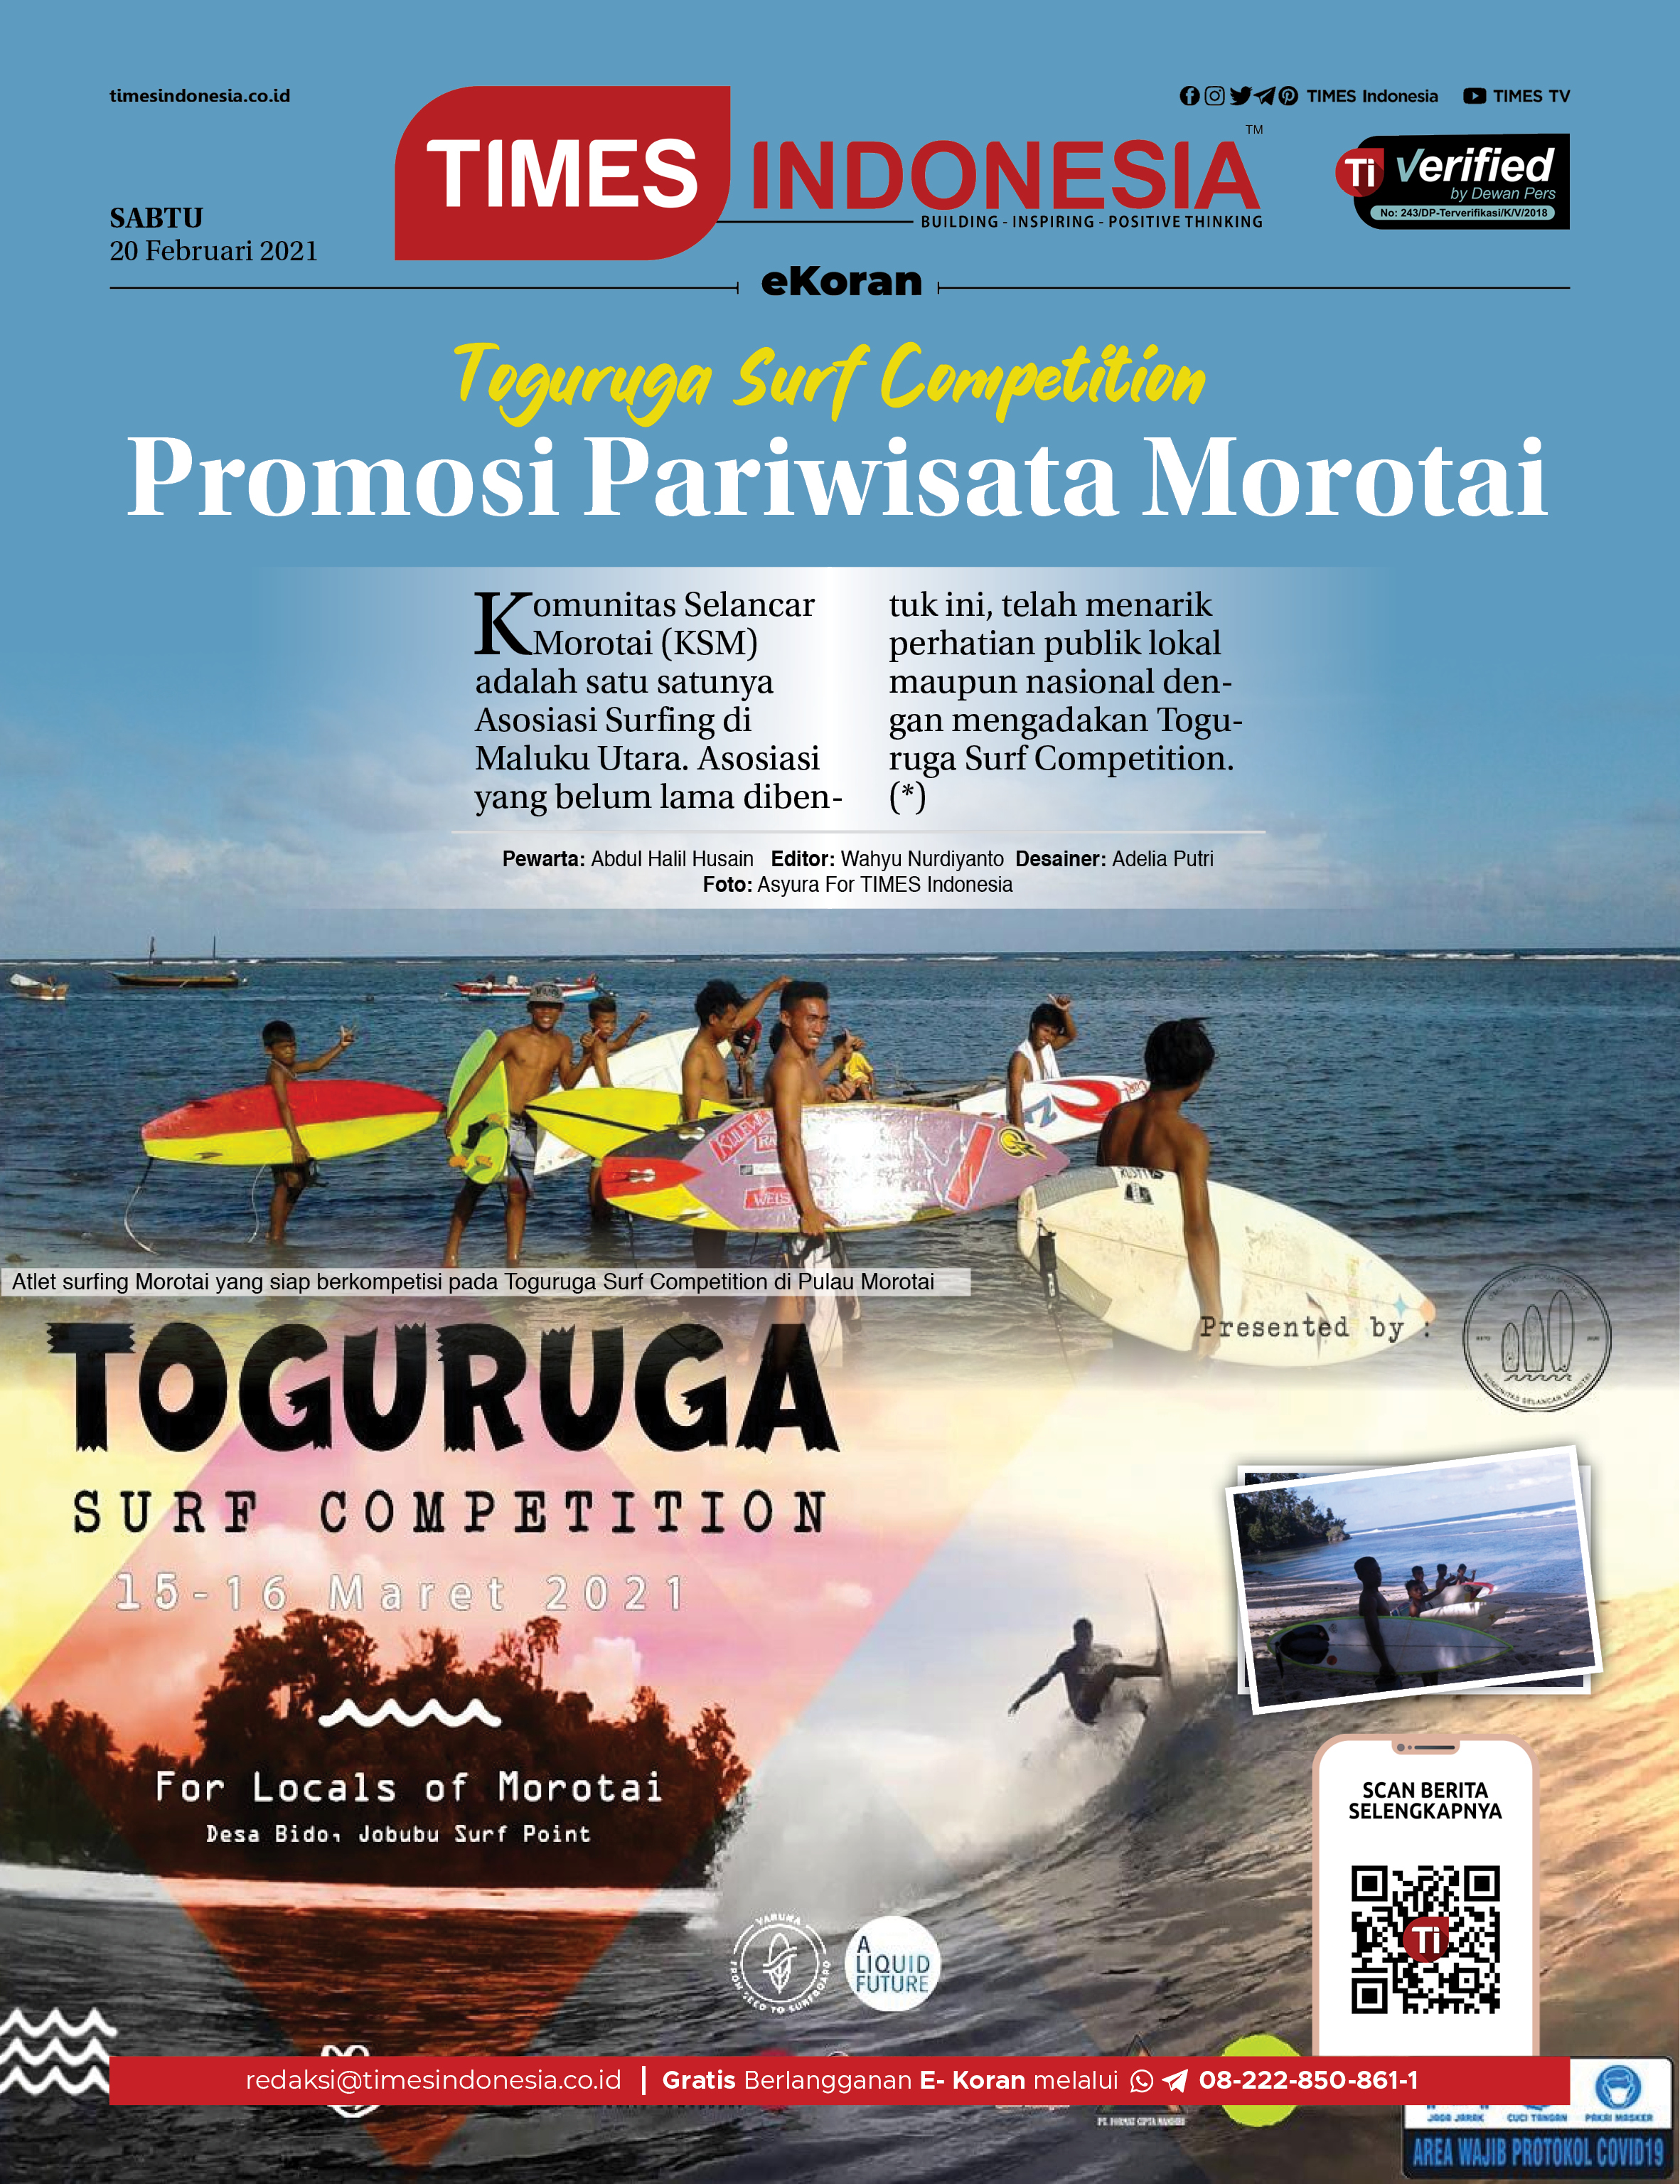 Ekoran-Sabtu-20-Februari-2021-Toguruga-Surf-Competition-Promosi-Pariwisata-Morotai.jpg